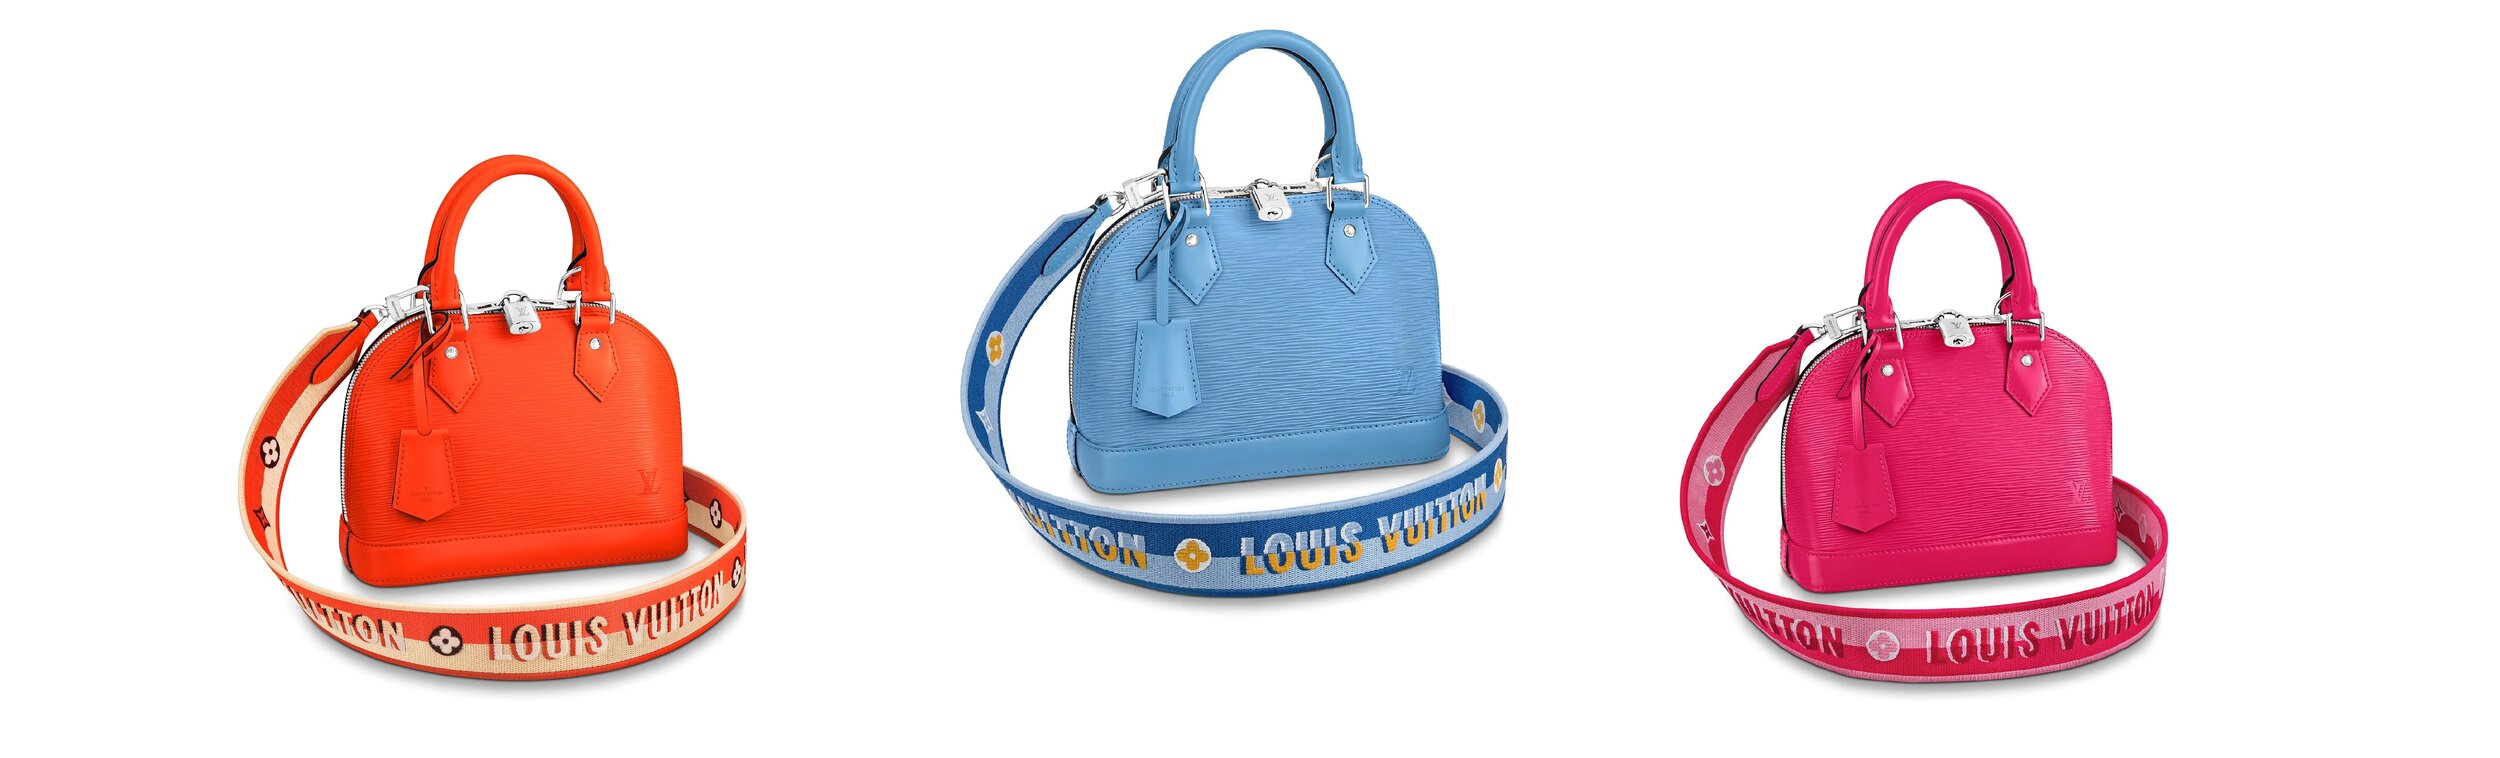 Louis Vuitton Alma BB Review + Best first LV bag 